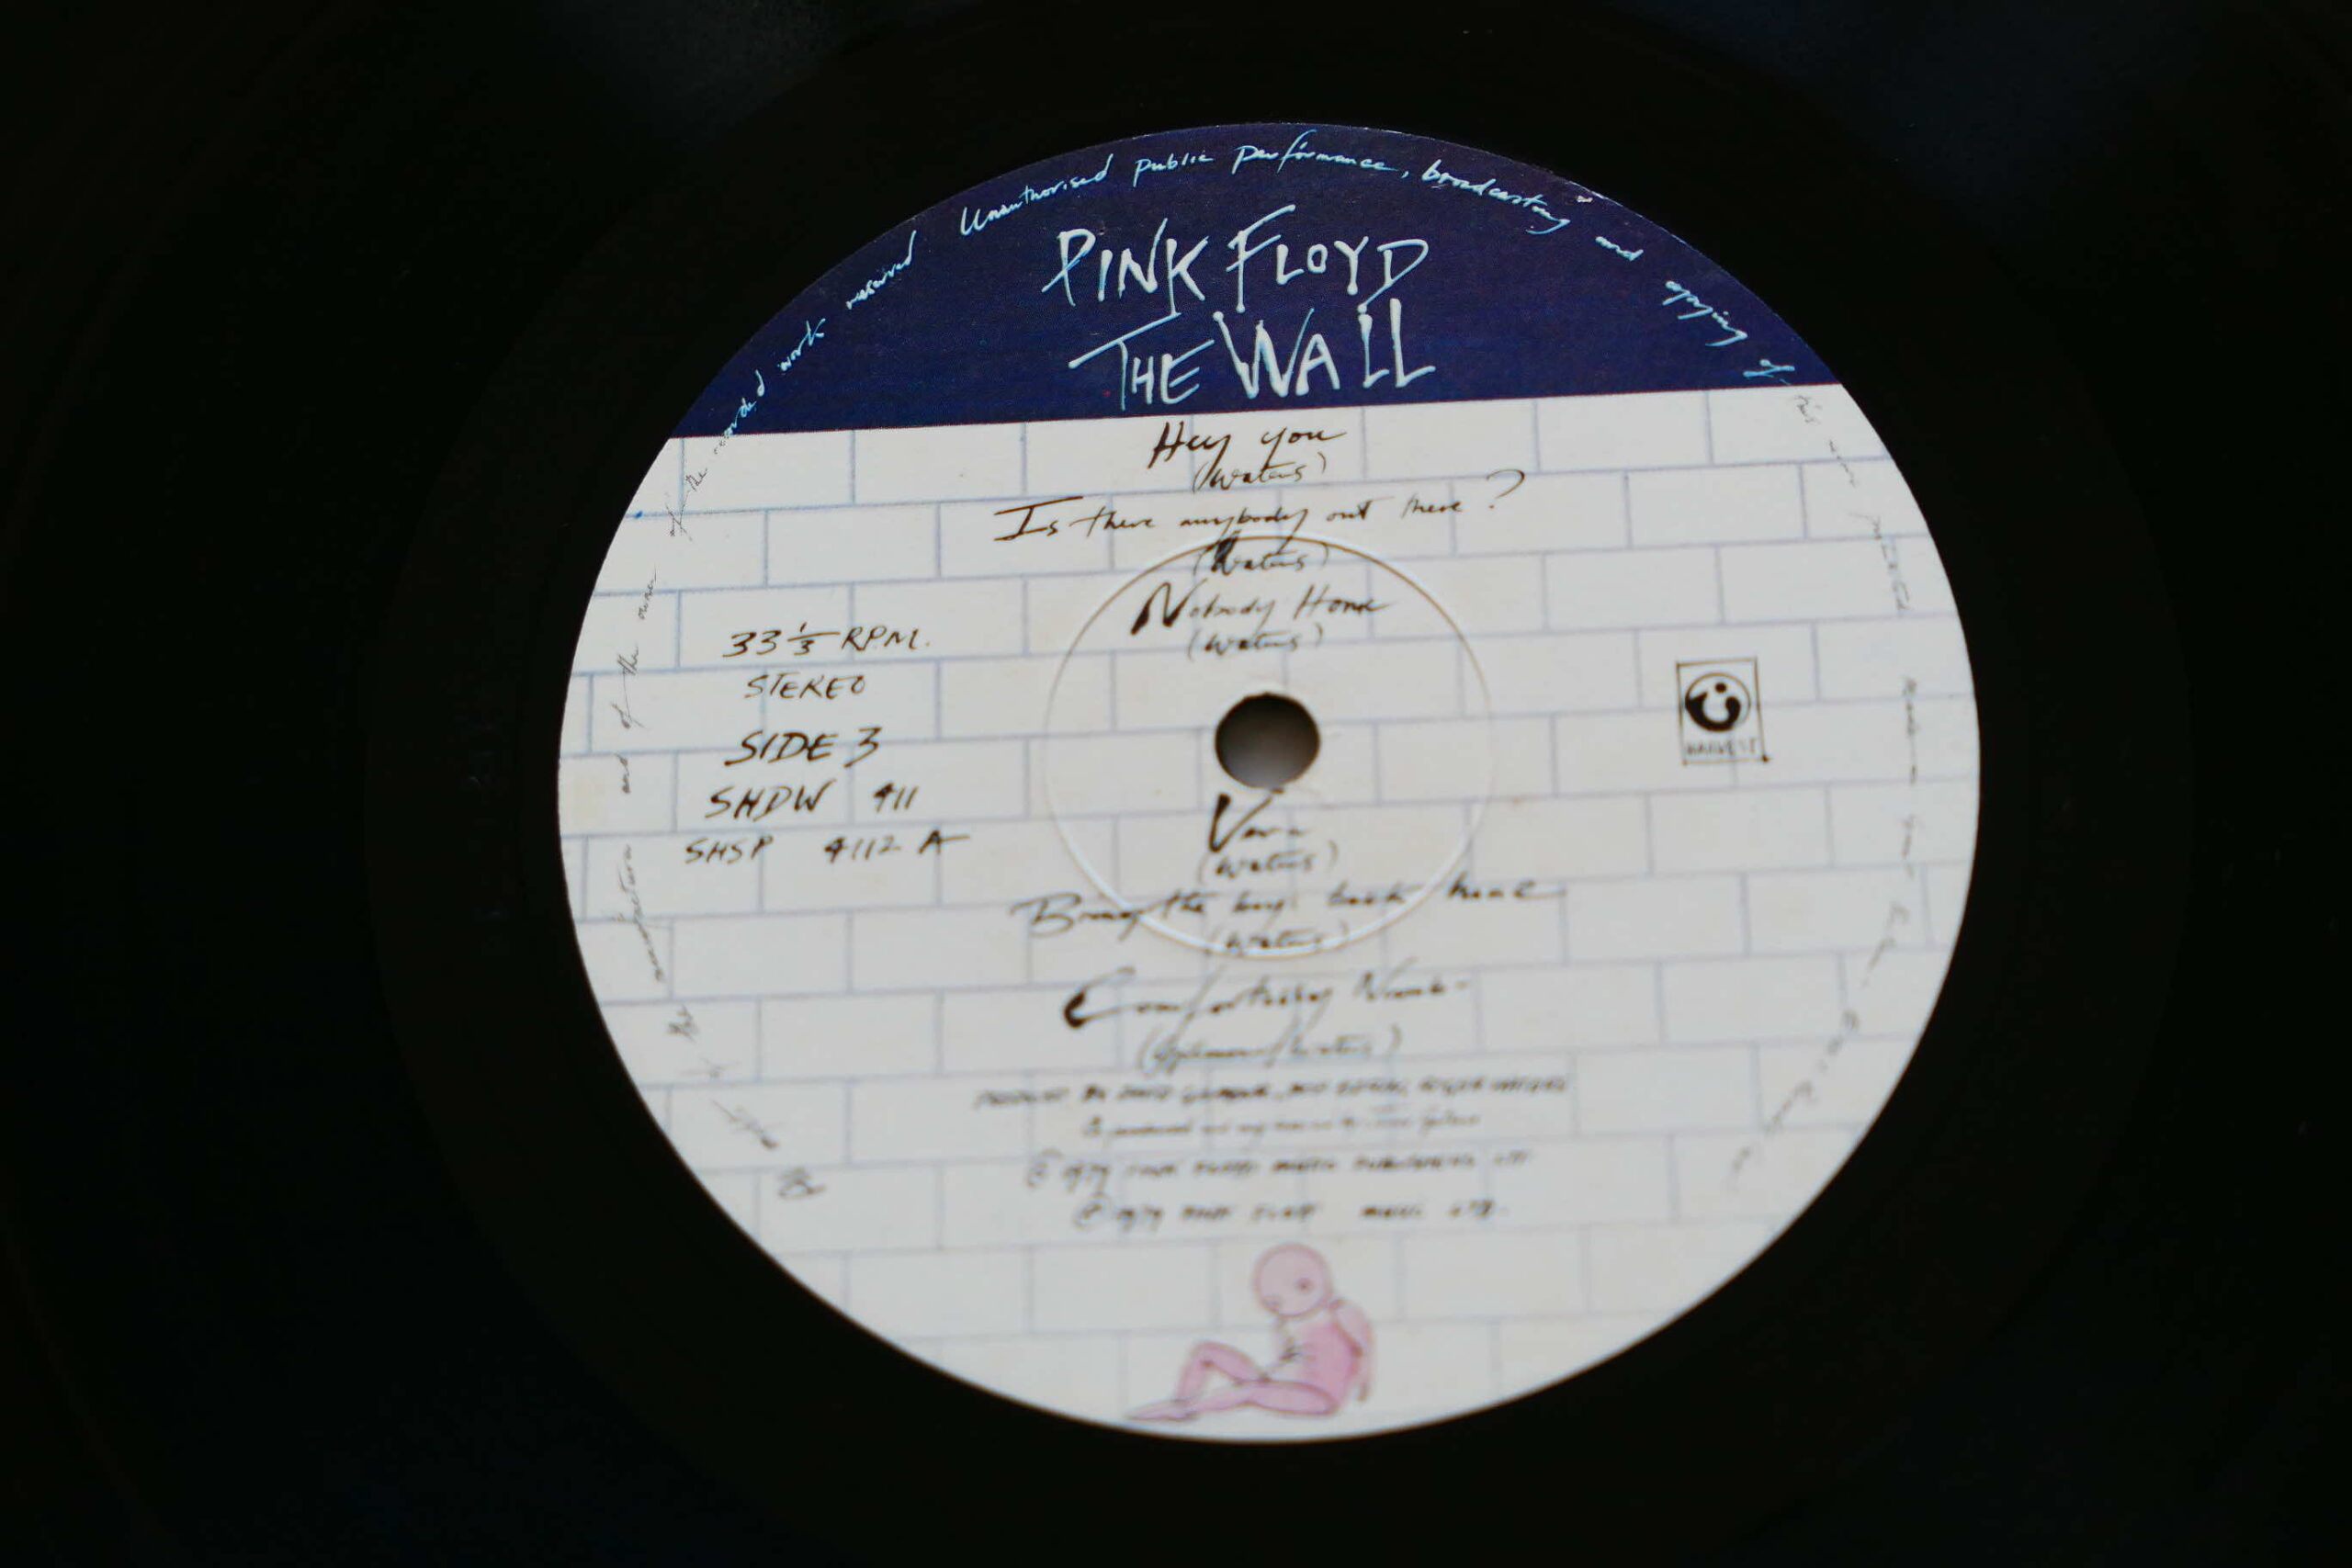 PINK-FLOYD-THE-WALL-LP-VINYL-ALBUM-RECORD